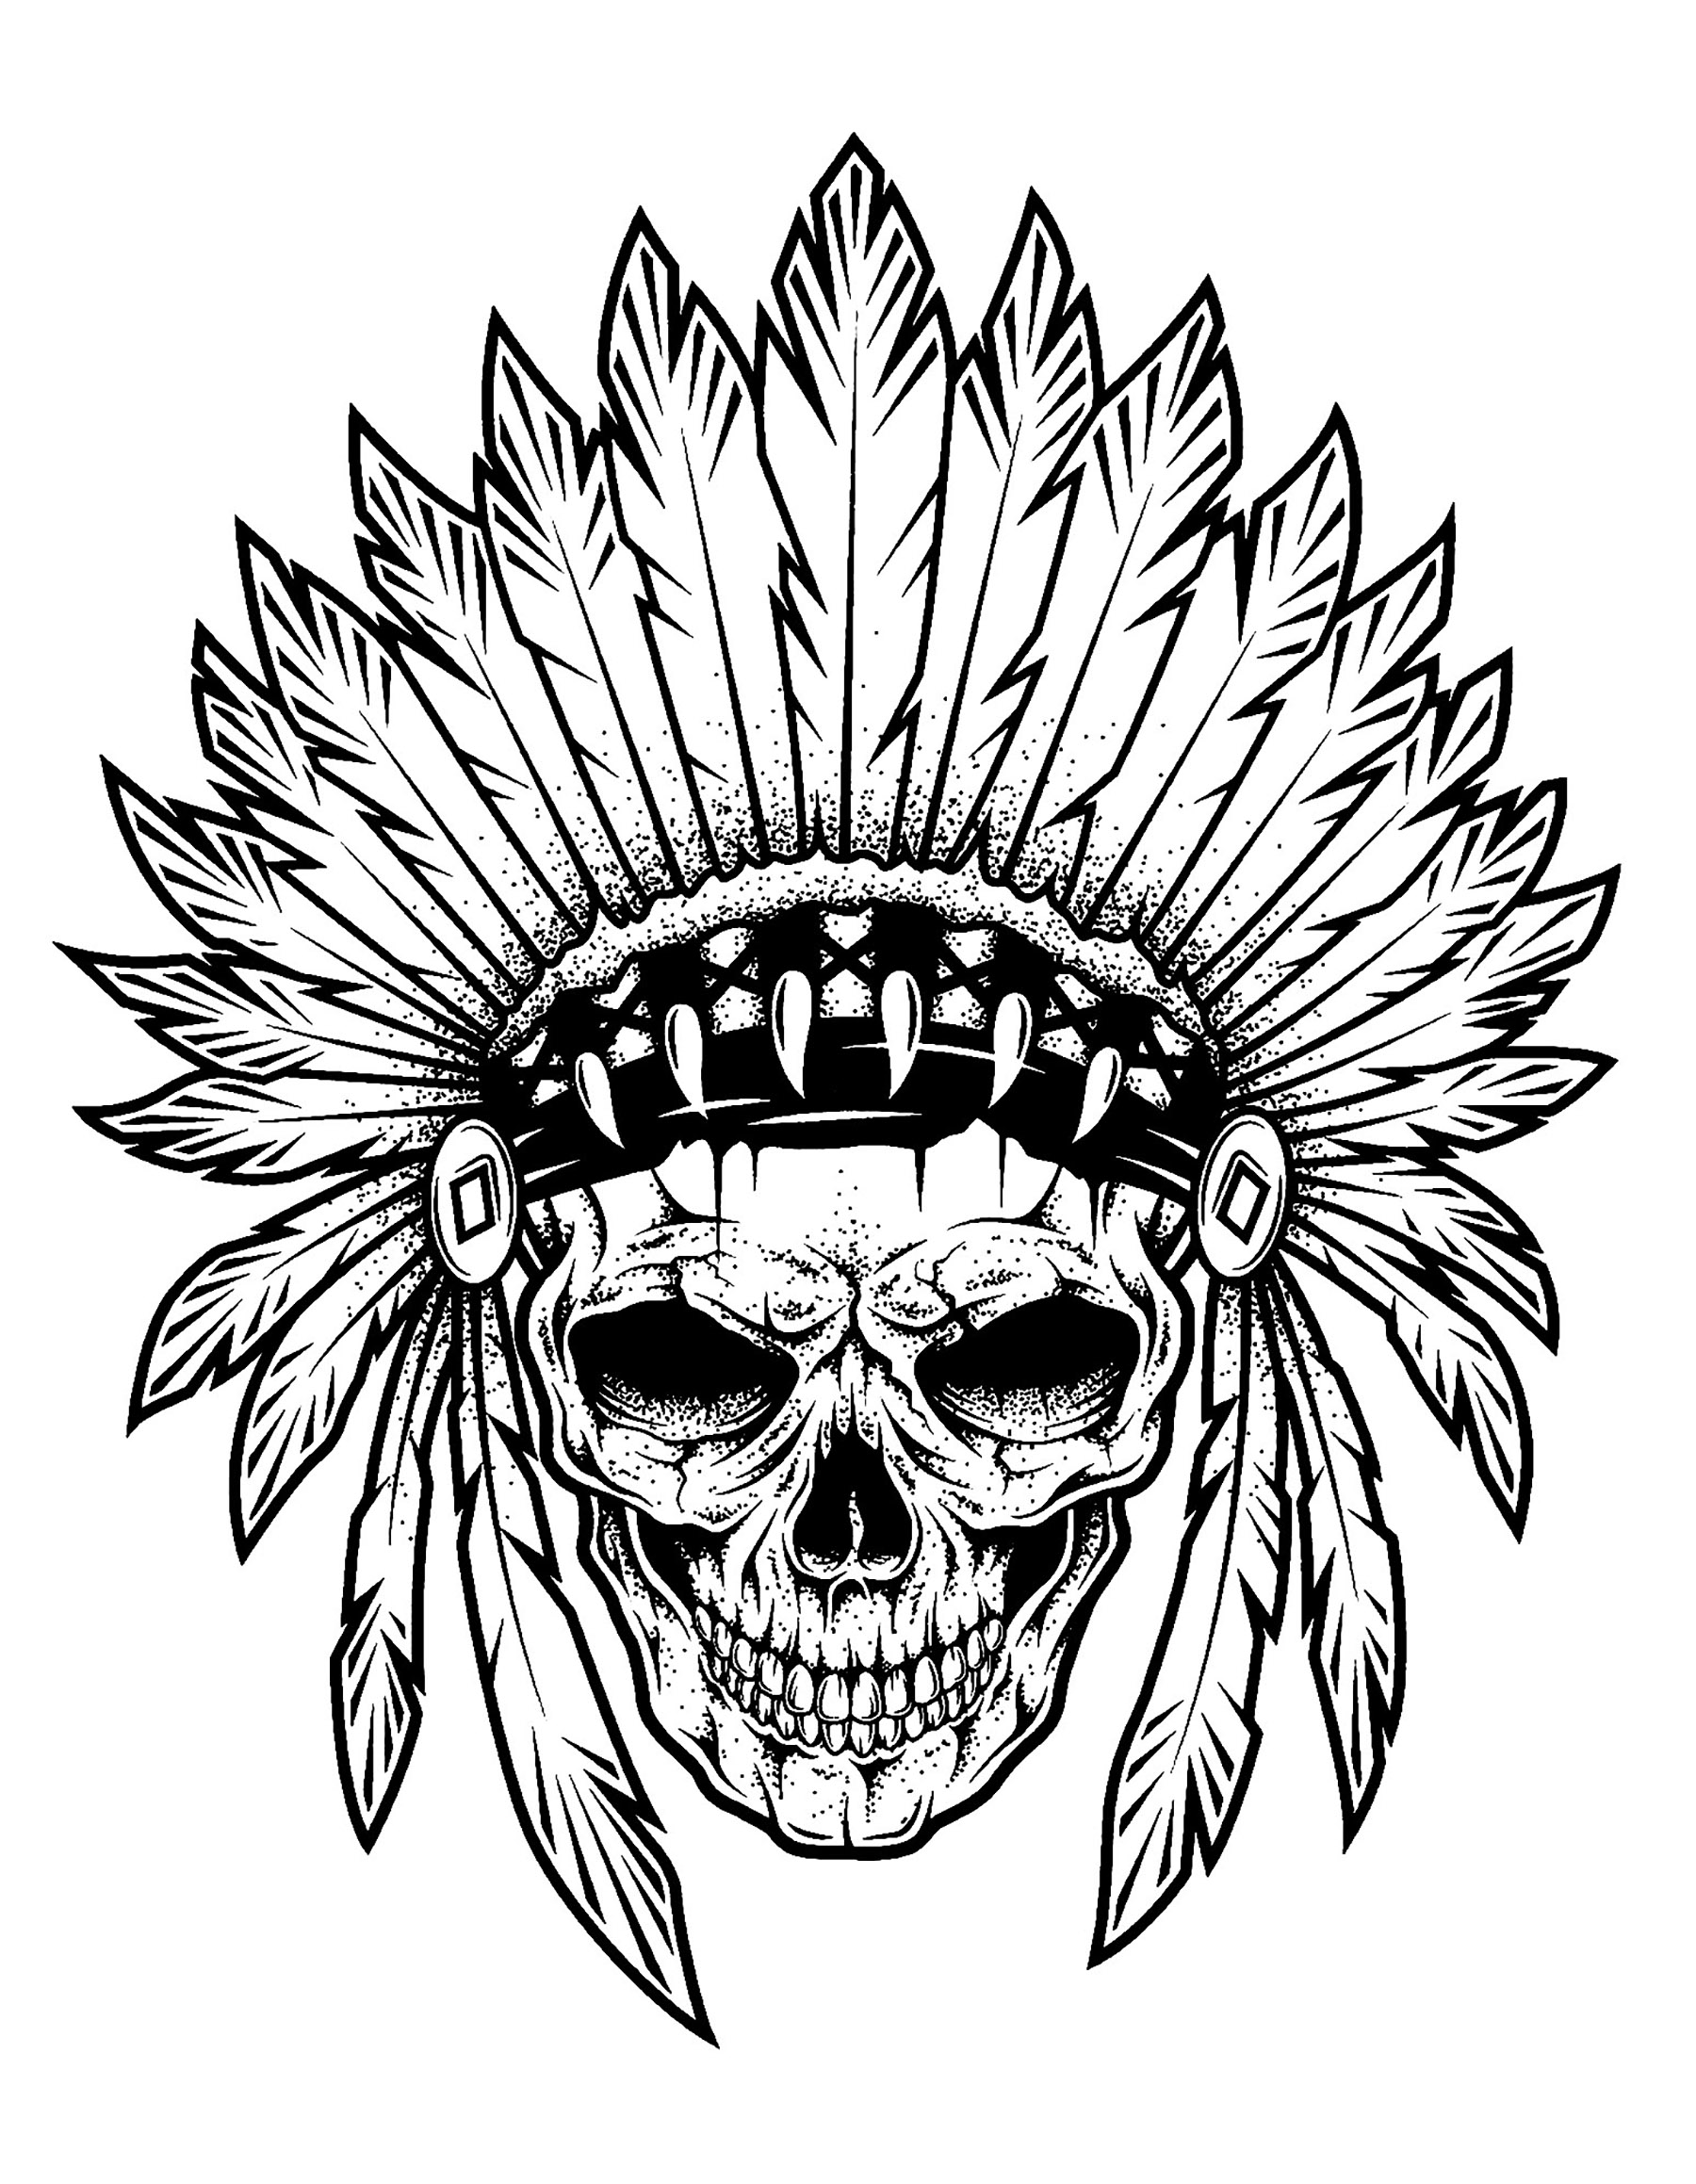 Tattoo of the skull of an Indian Chief, Source : 123rf   Artist : makstrv